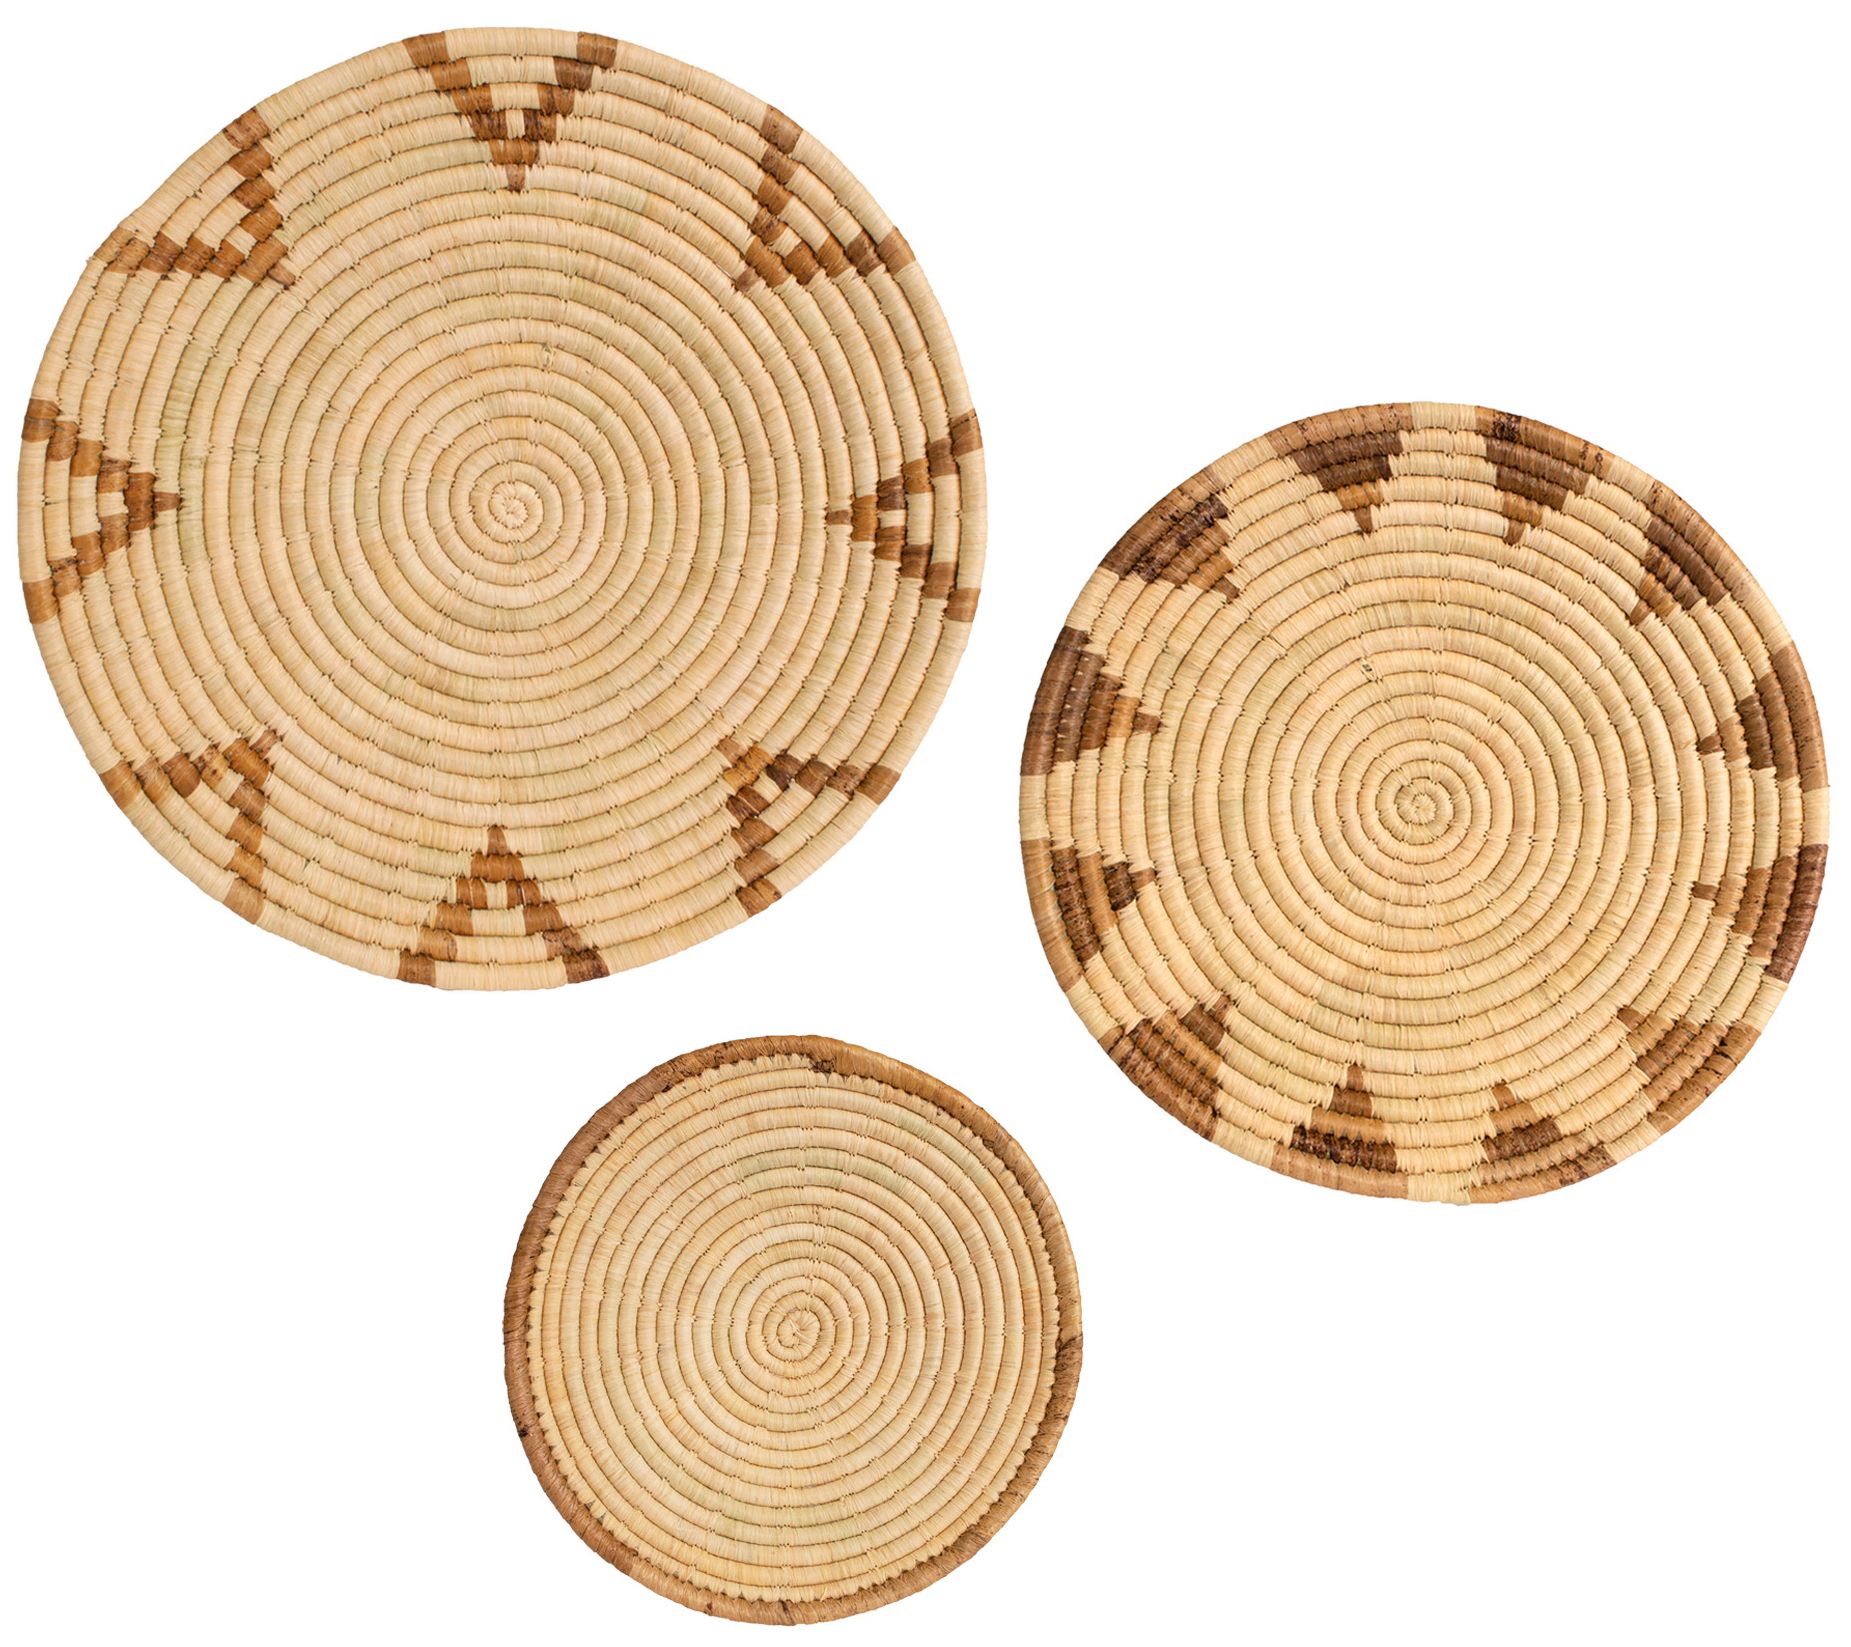 KAZI Hand-Crafted 3-Piece Woven Round Wall Basket Set 